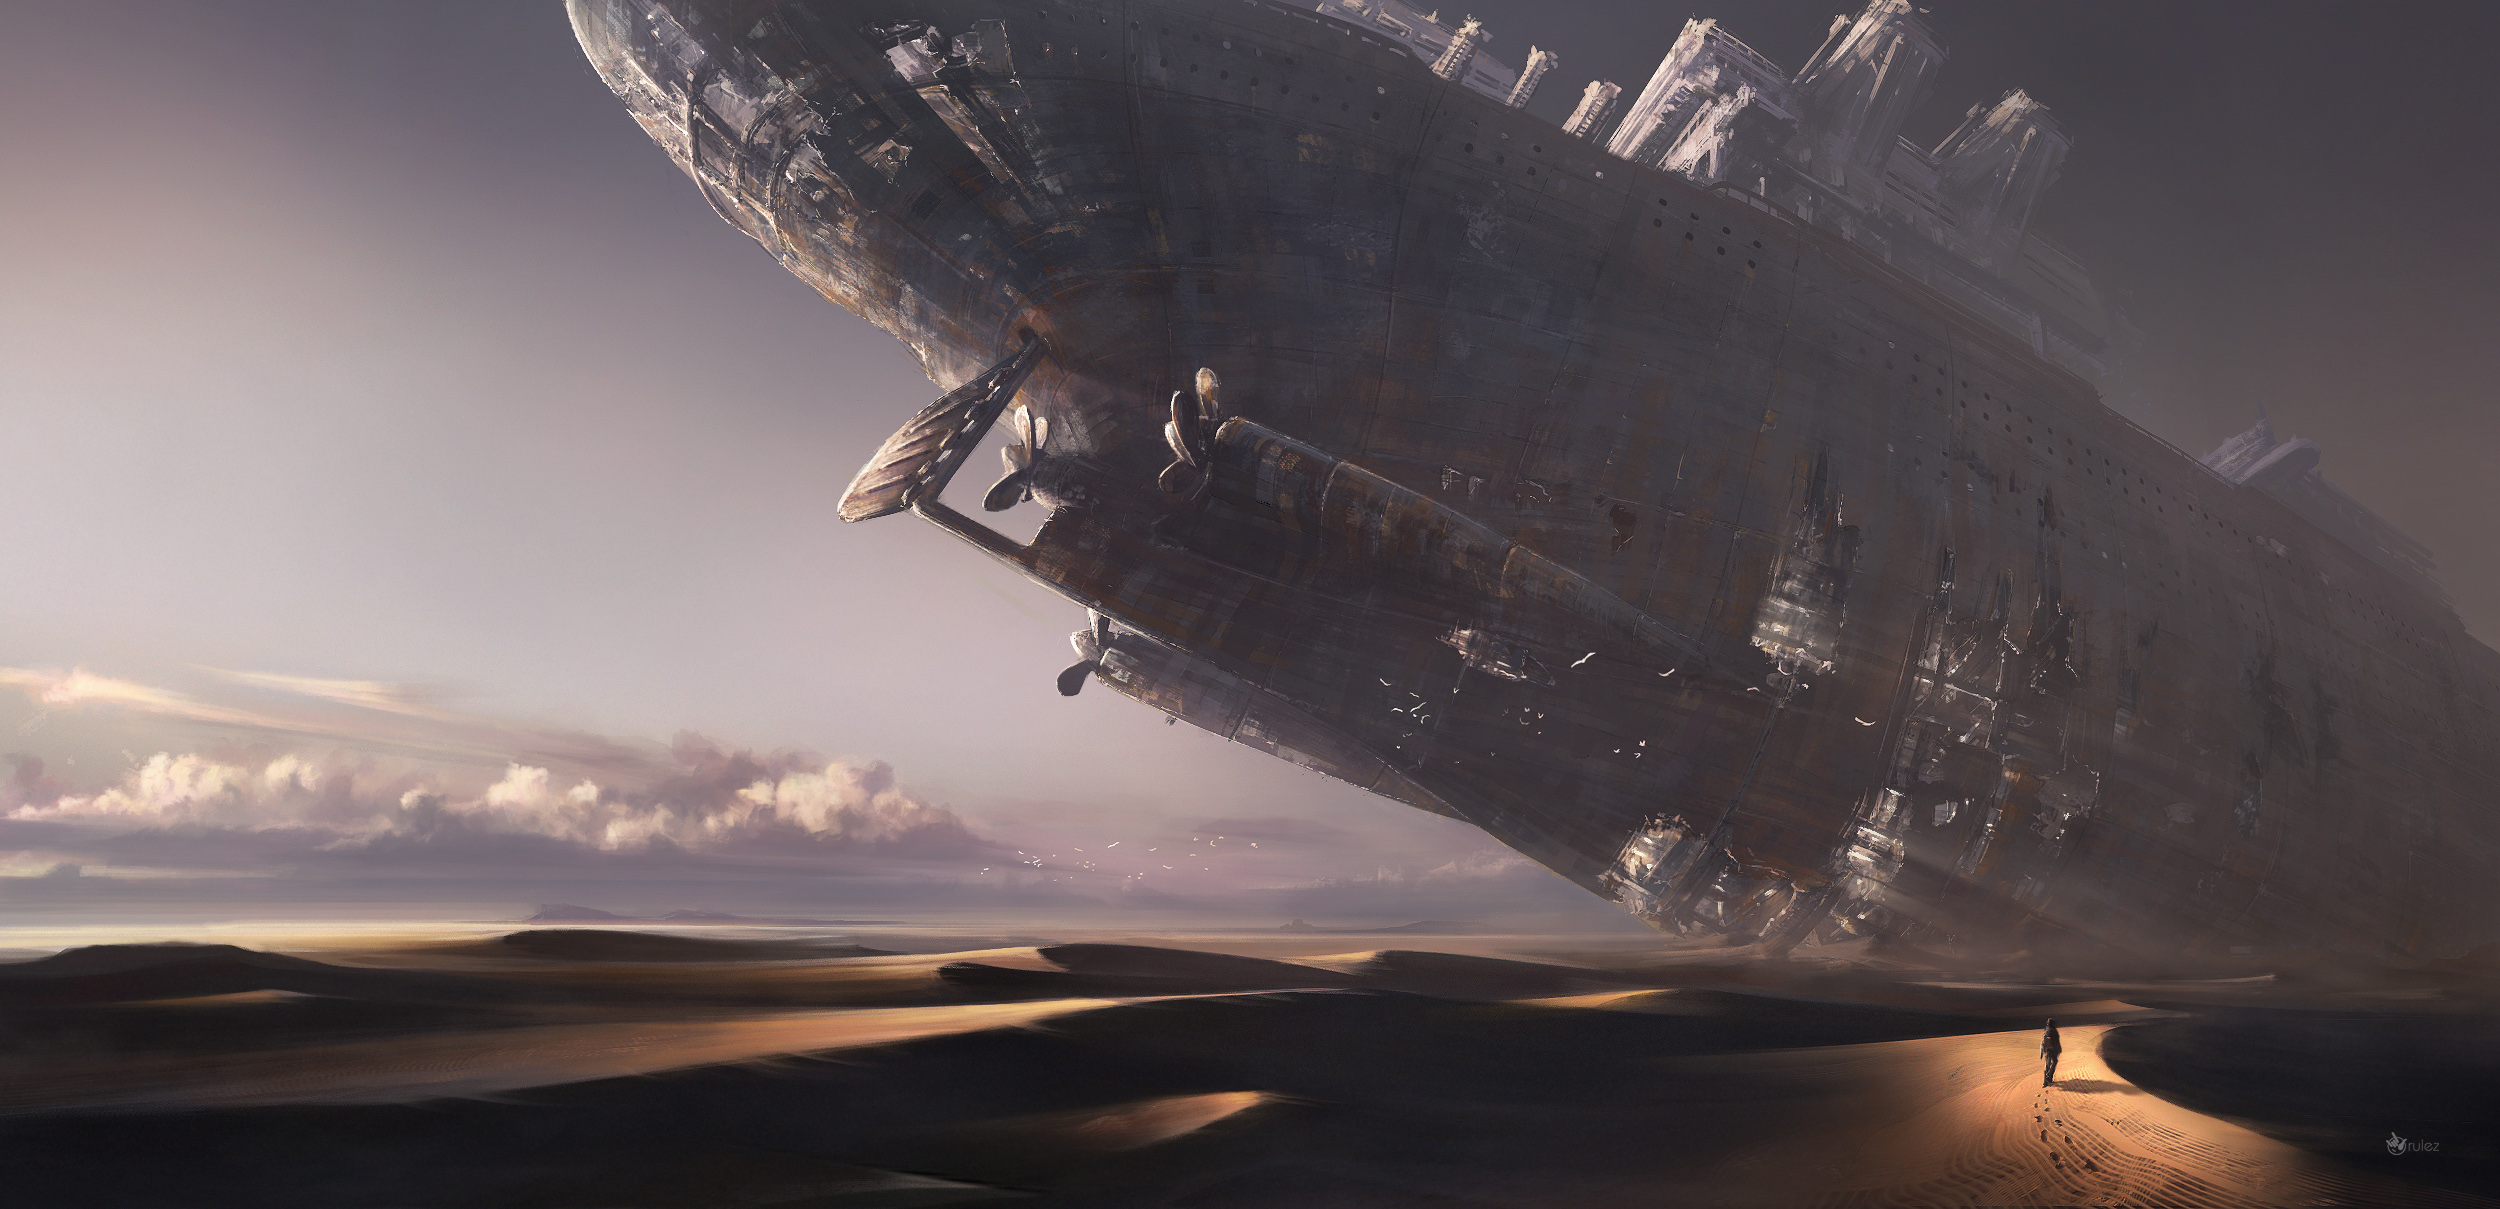 Ship in the desert by Dmitriy Kuzin